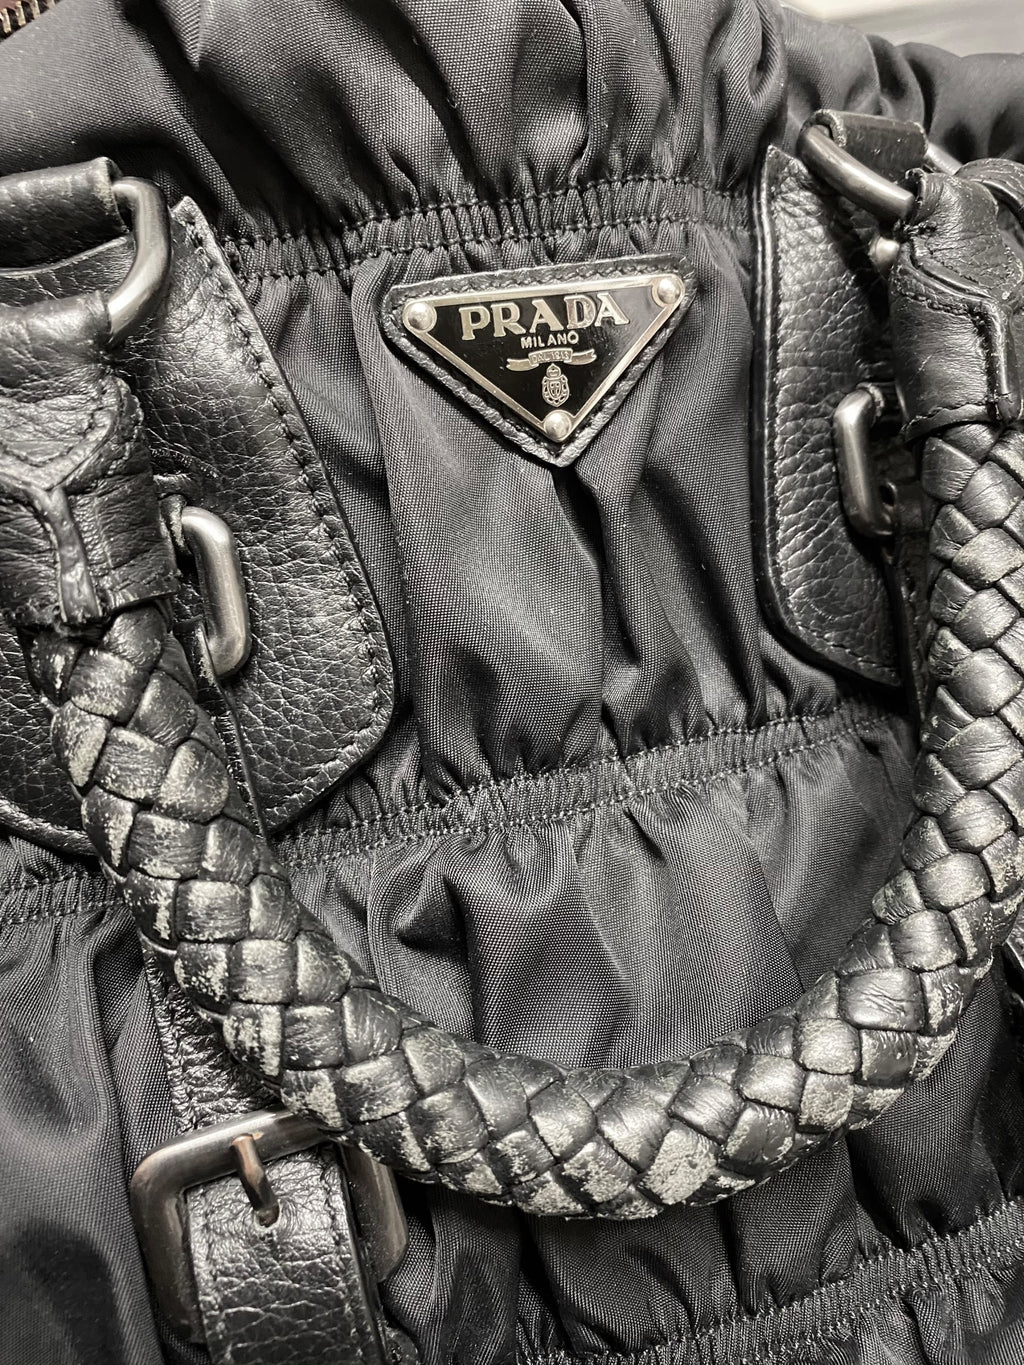 PRADA Tessuto Gaufre Black Nylon & Leather Tote Handbag